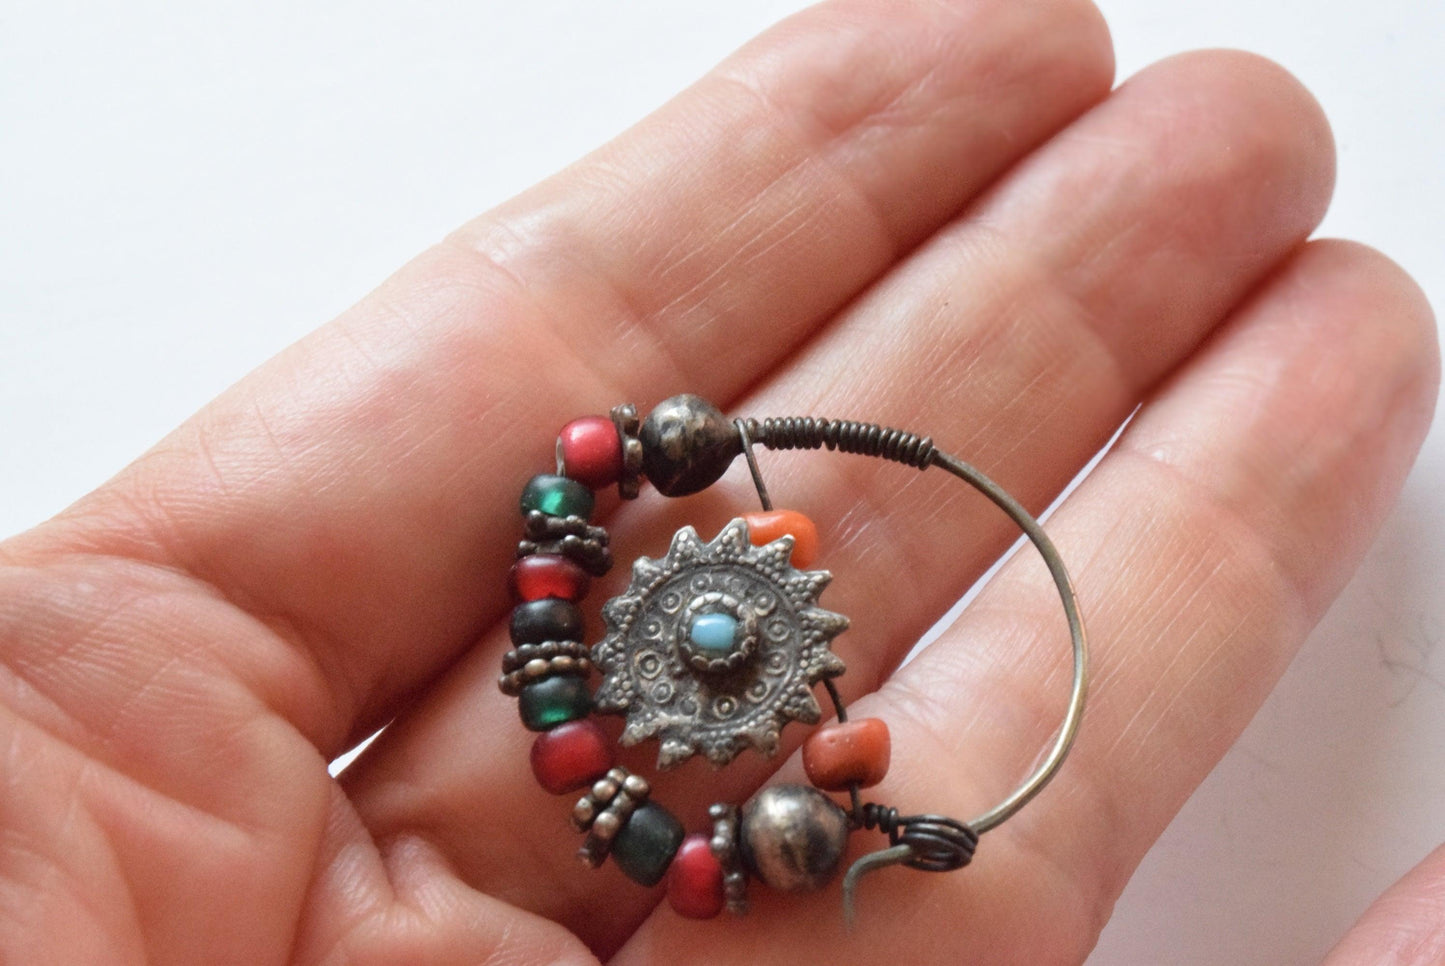 Antique Silver and Coral Uzbek Nose Ring - Anteeka